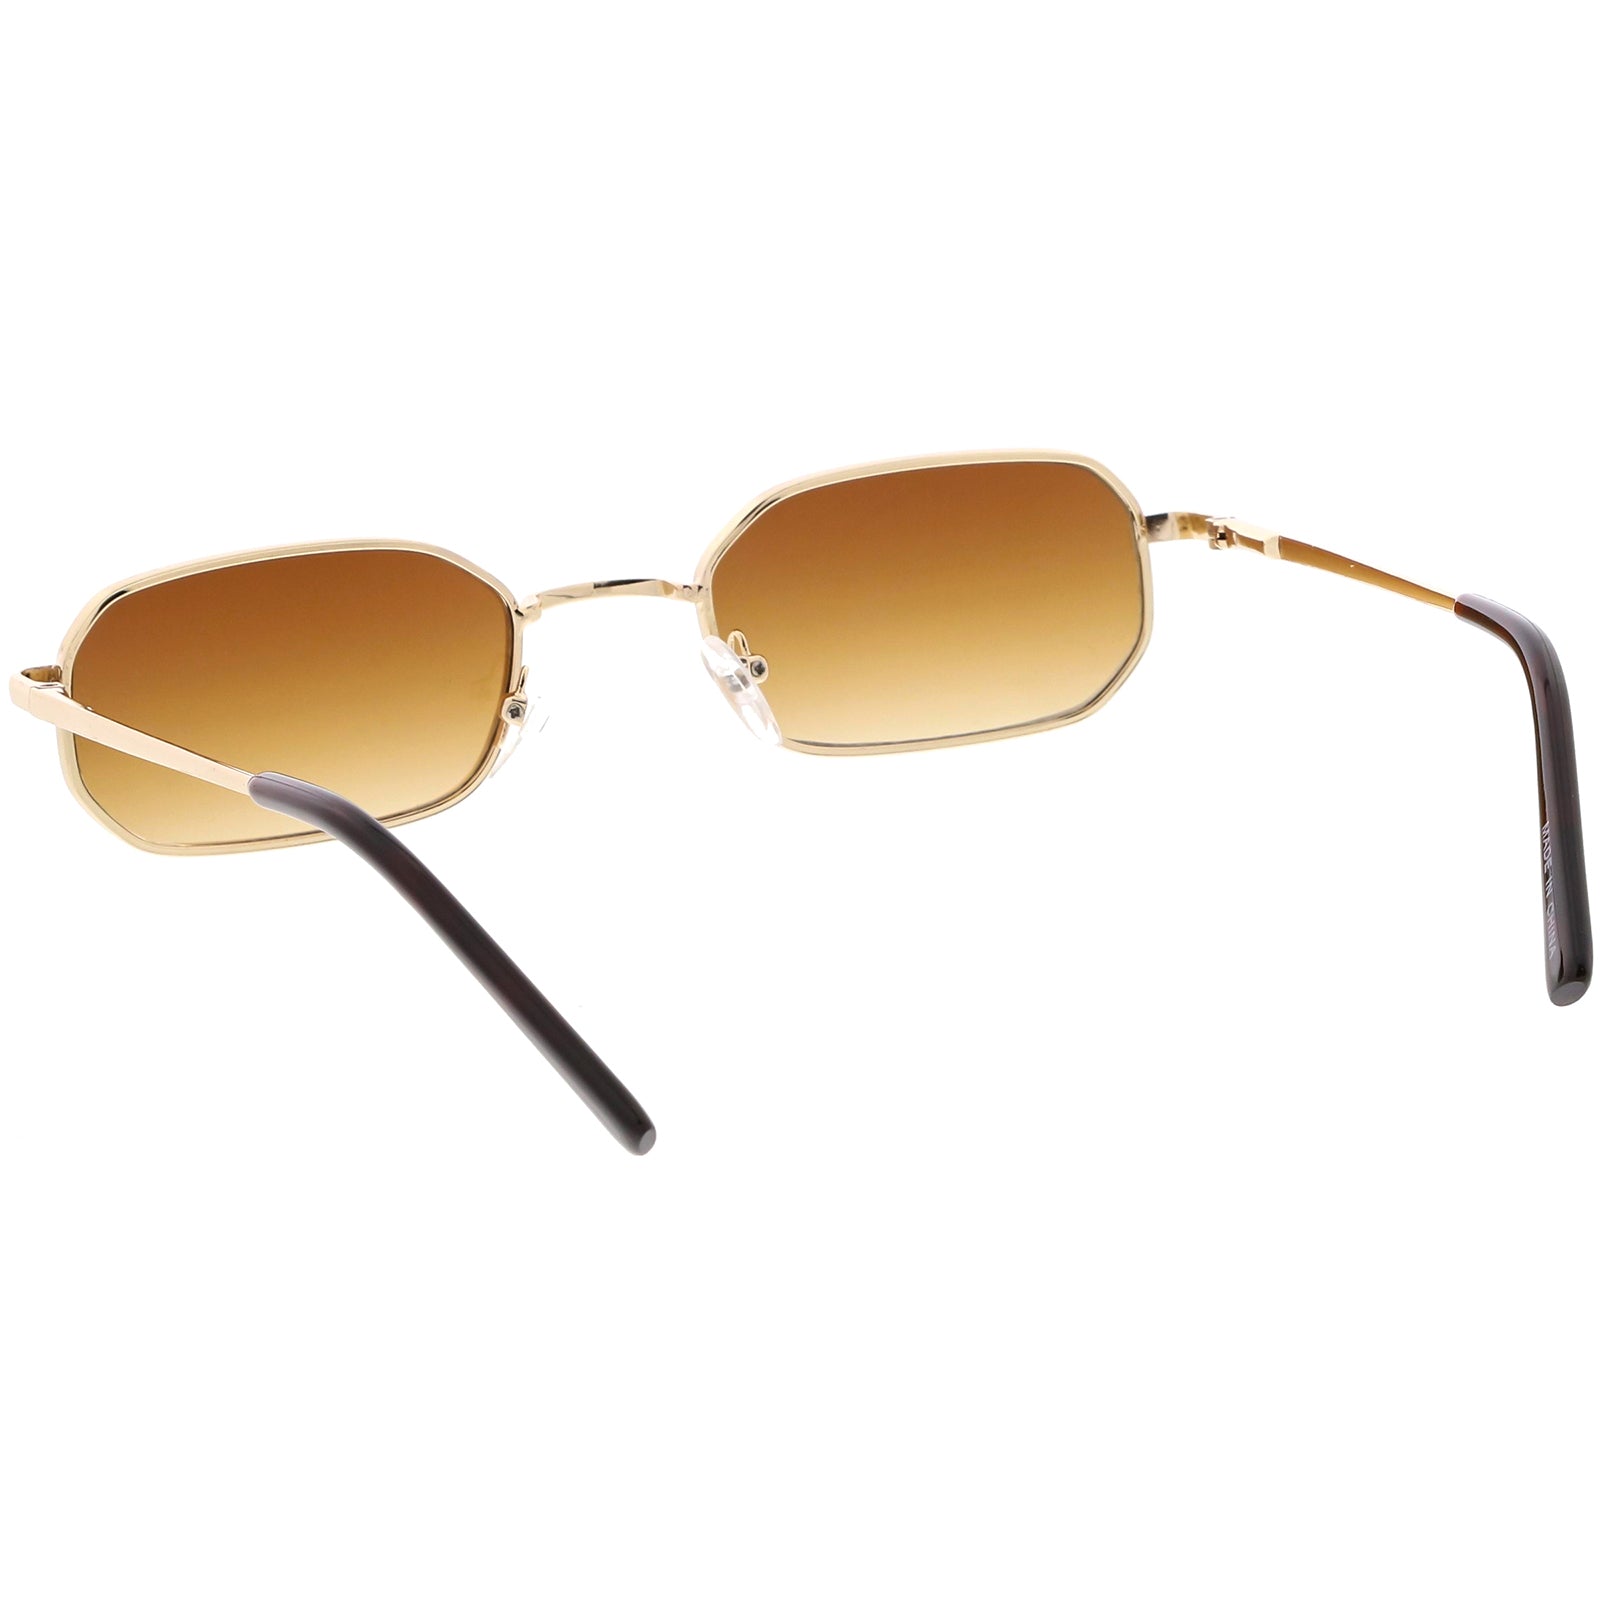 Gold Frame Black Lens Small Square Sunglasses